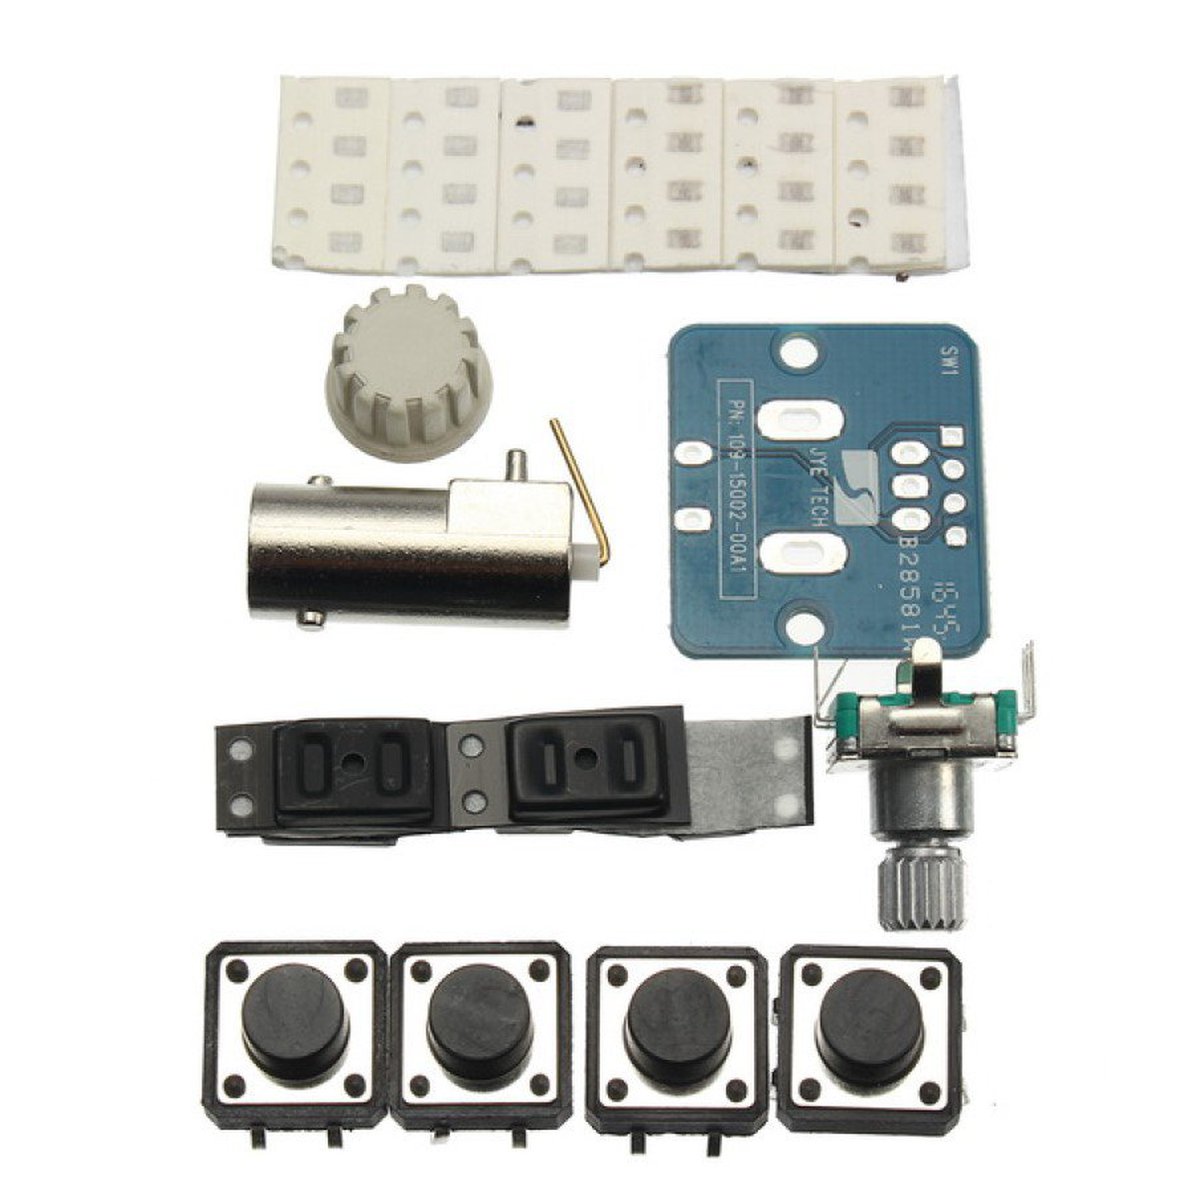 DIY Oscilloscope Kit - Soldering Project Electronics Kit